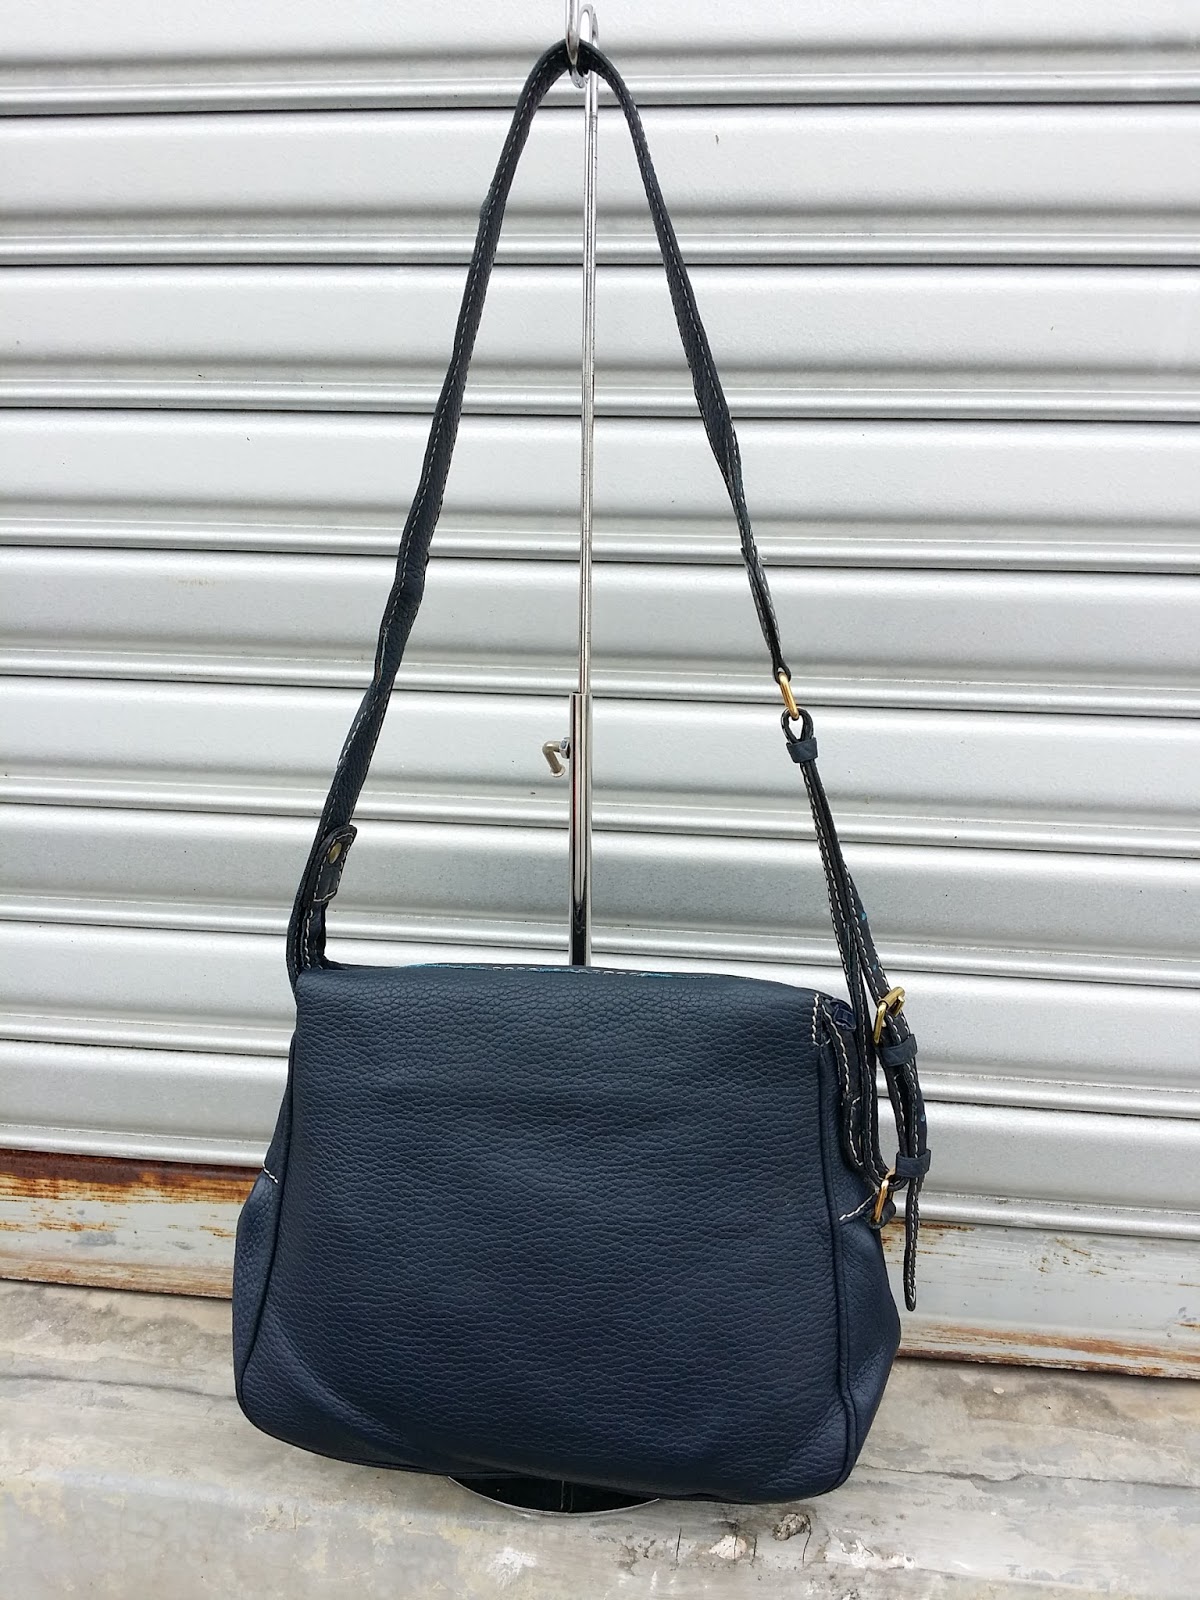 d0rayakEEbaG: Authentic Celine Paris Leather Shoulder/Sling Bag(SOLD)